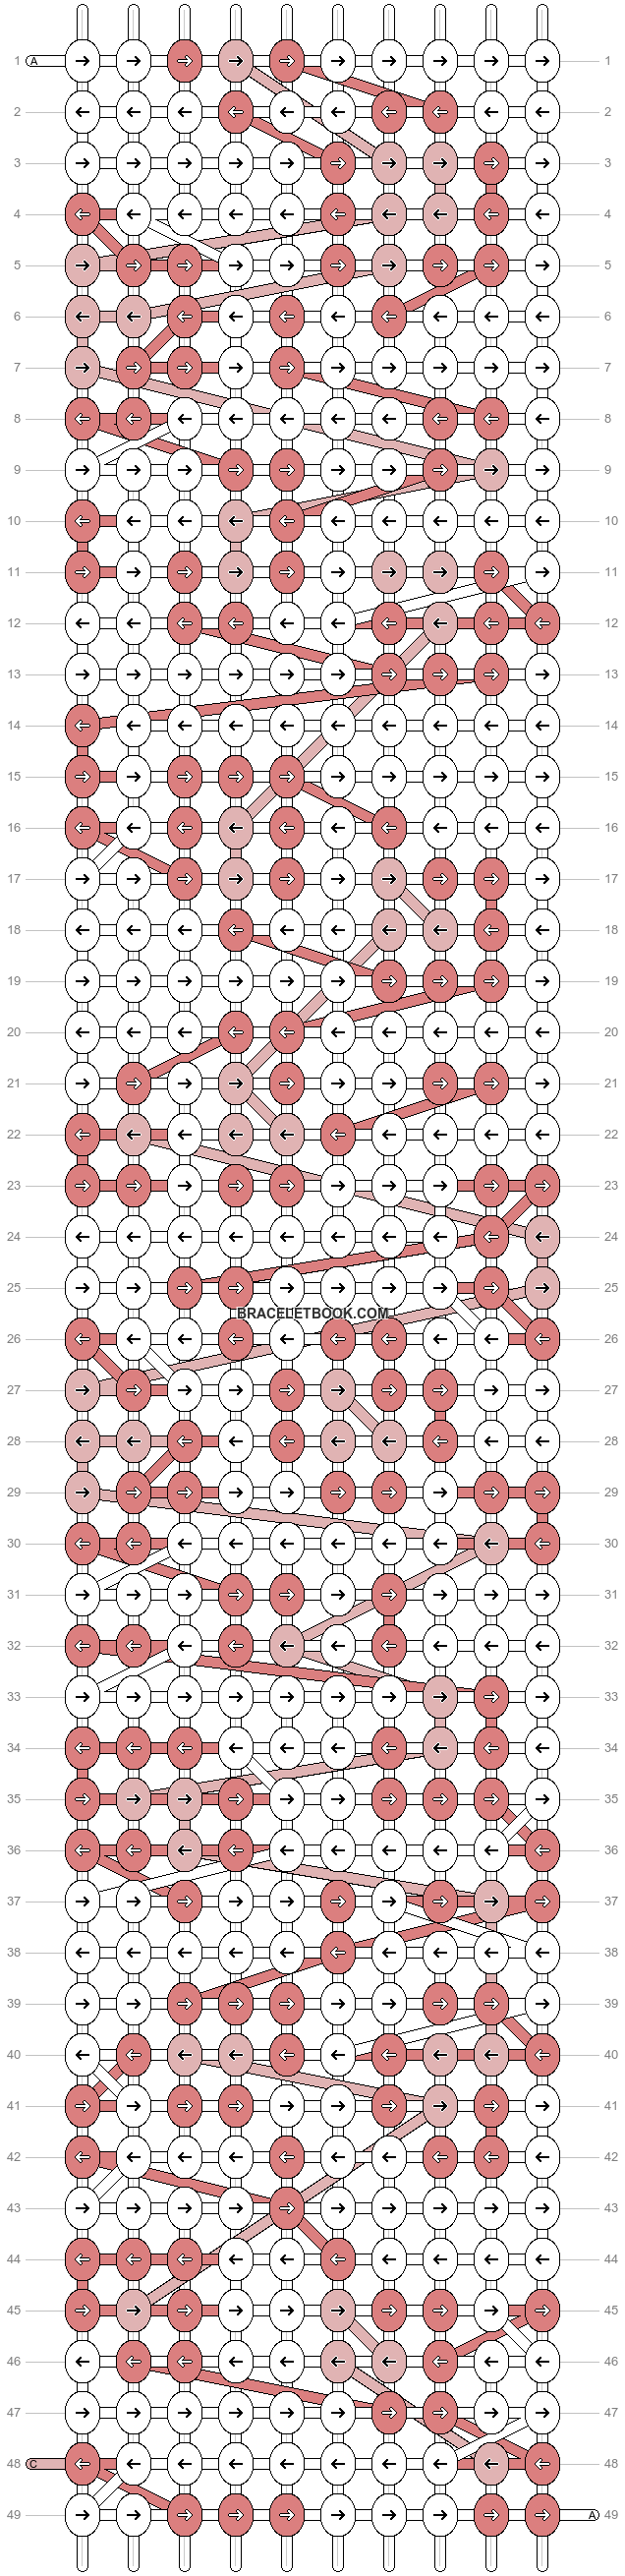 Alpha pattern #45272 variation #132813 pattern